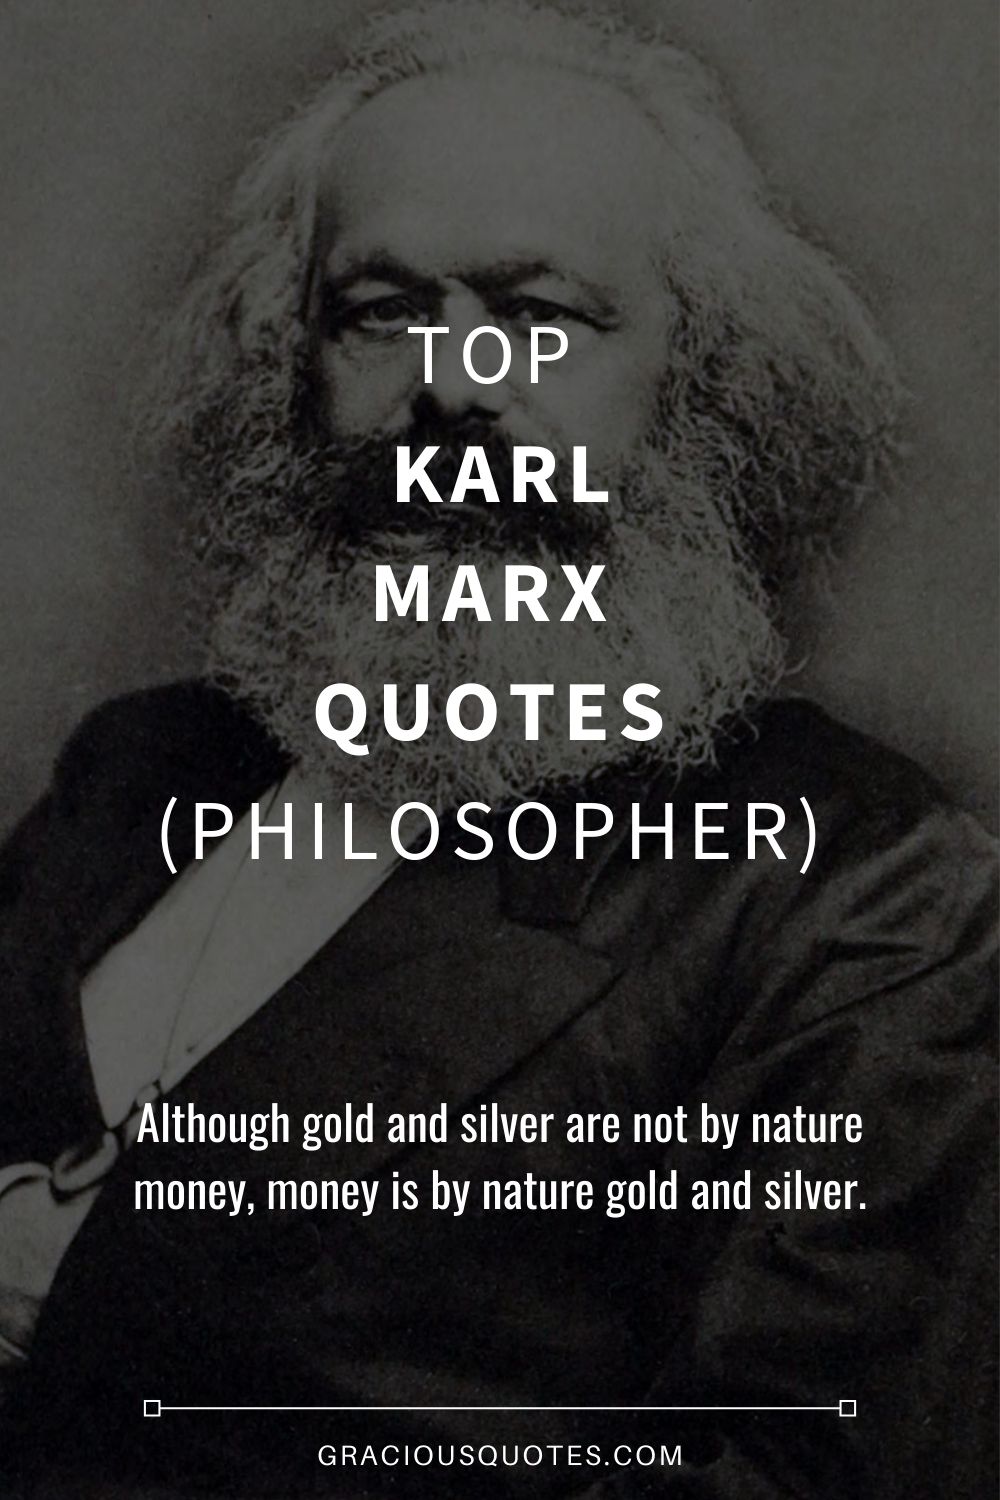 Top Karl Marx Quotes (PHILOSOPHER) - Gracious Quotes